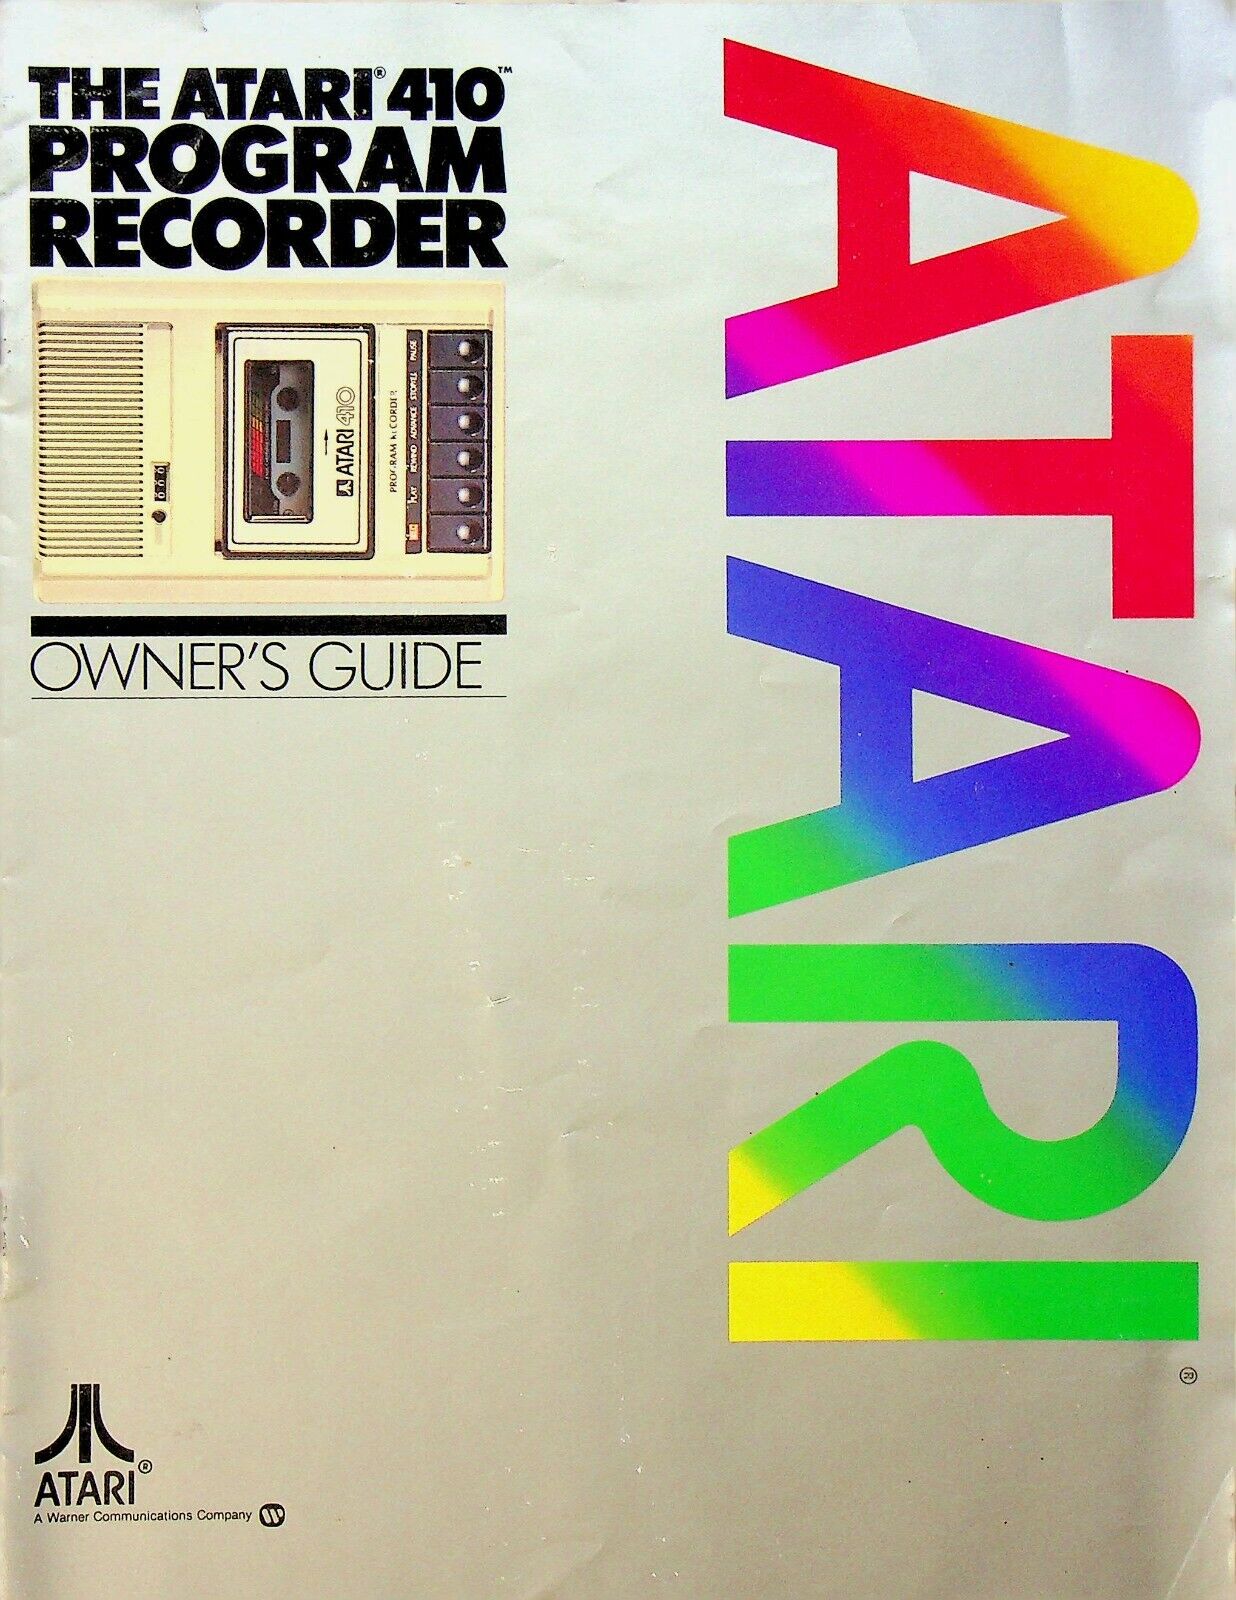 Vtg 1981 OWNER'S Guide Manual Atari 410 Program Recorder m2000